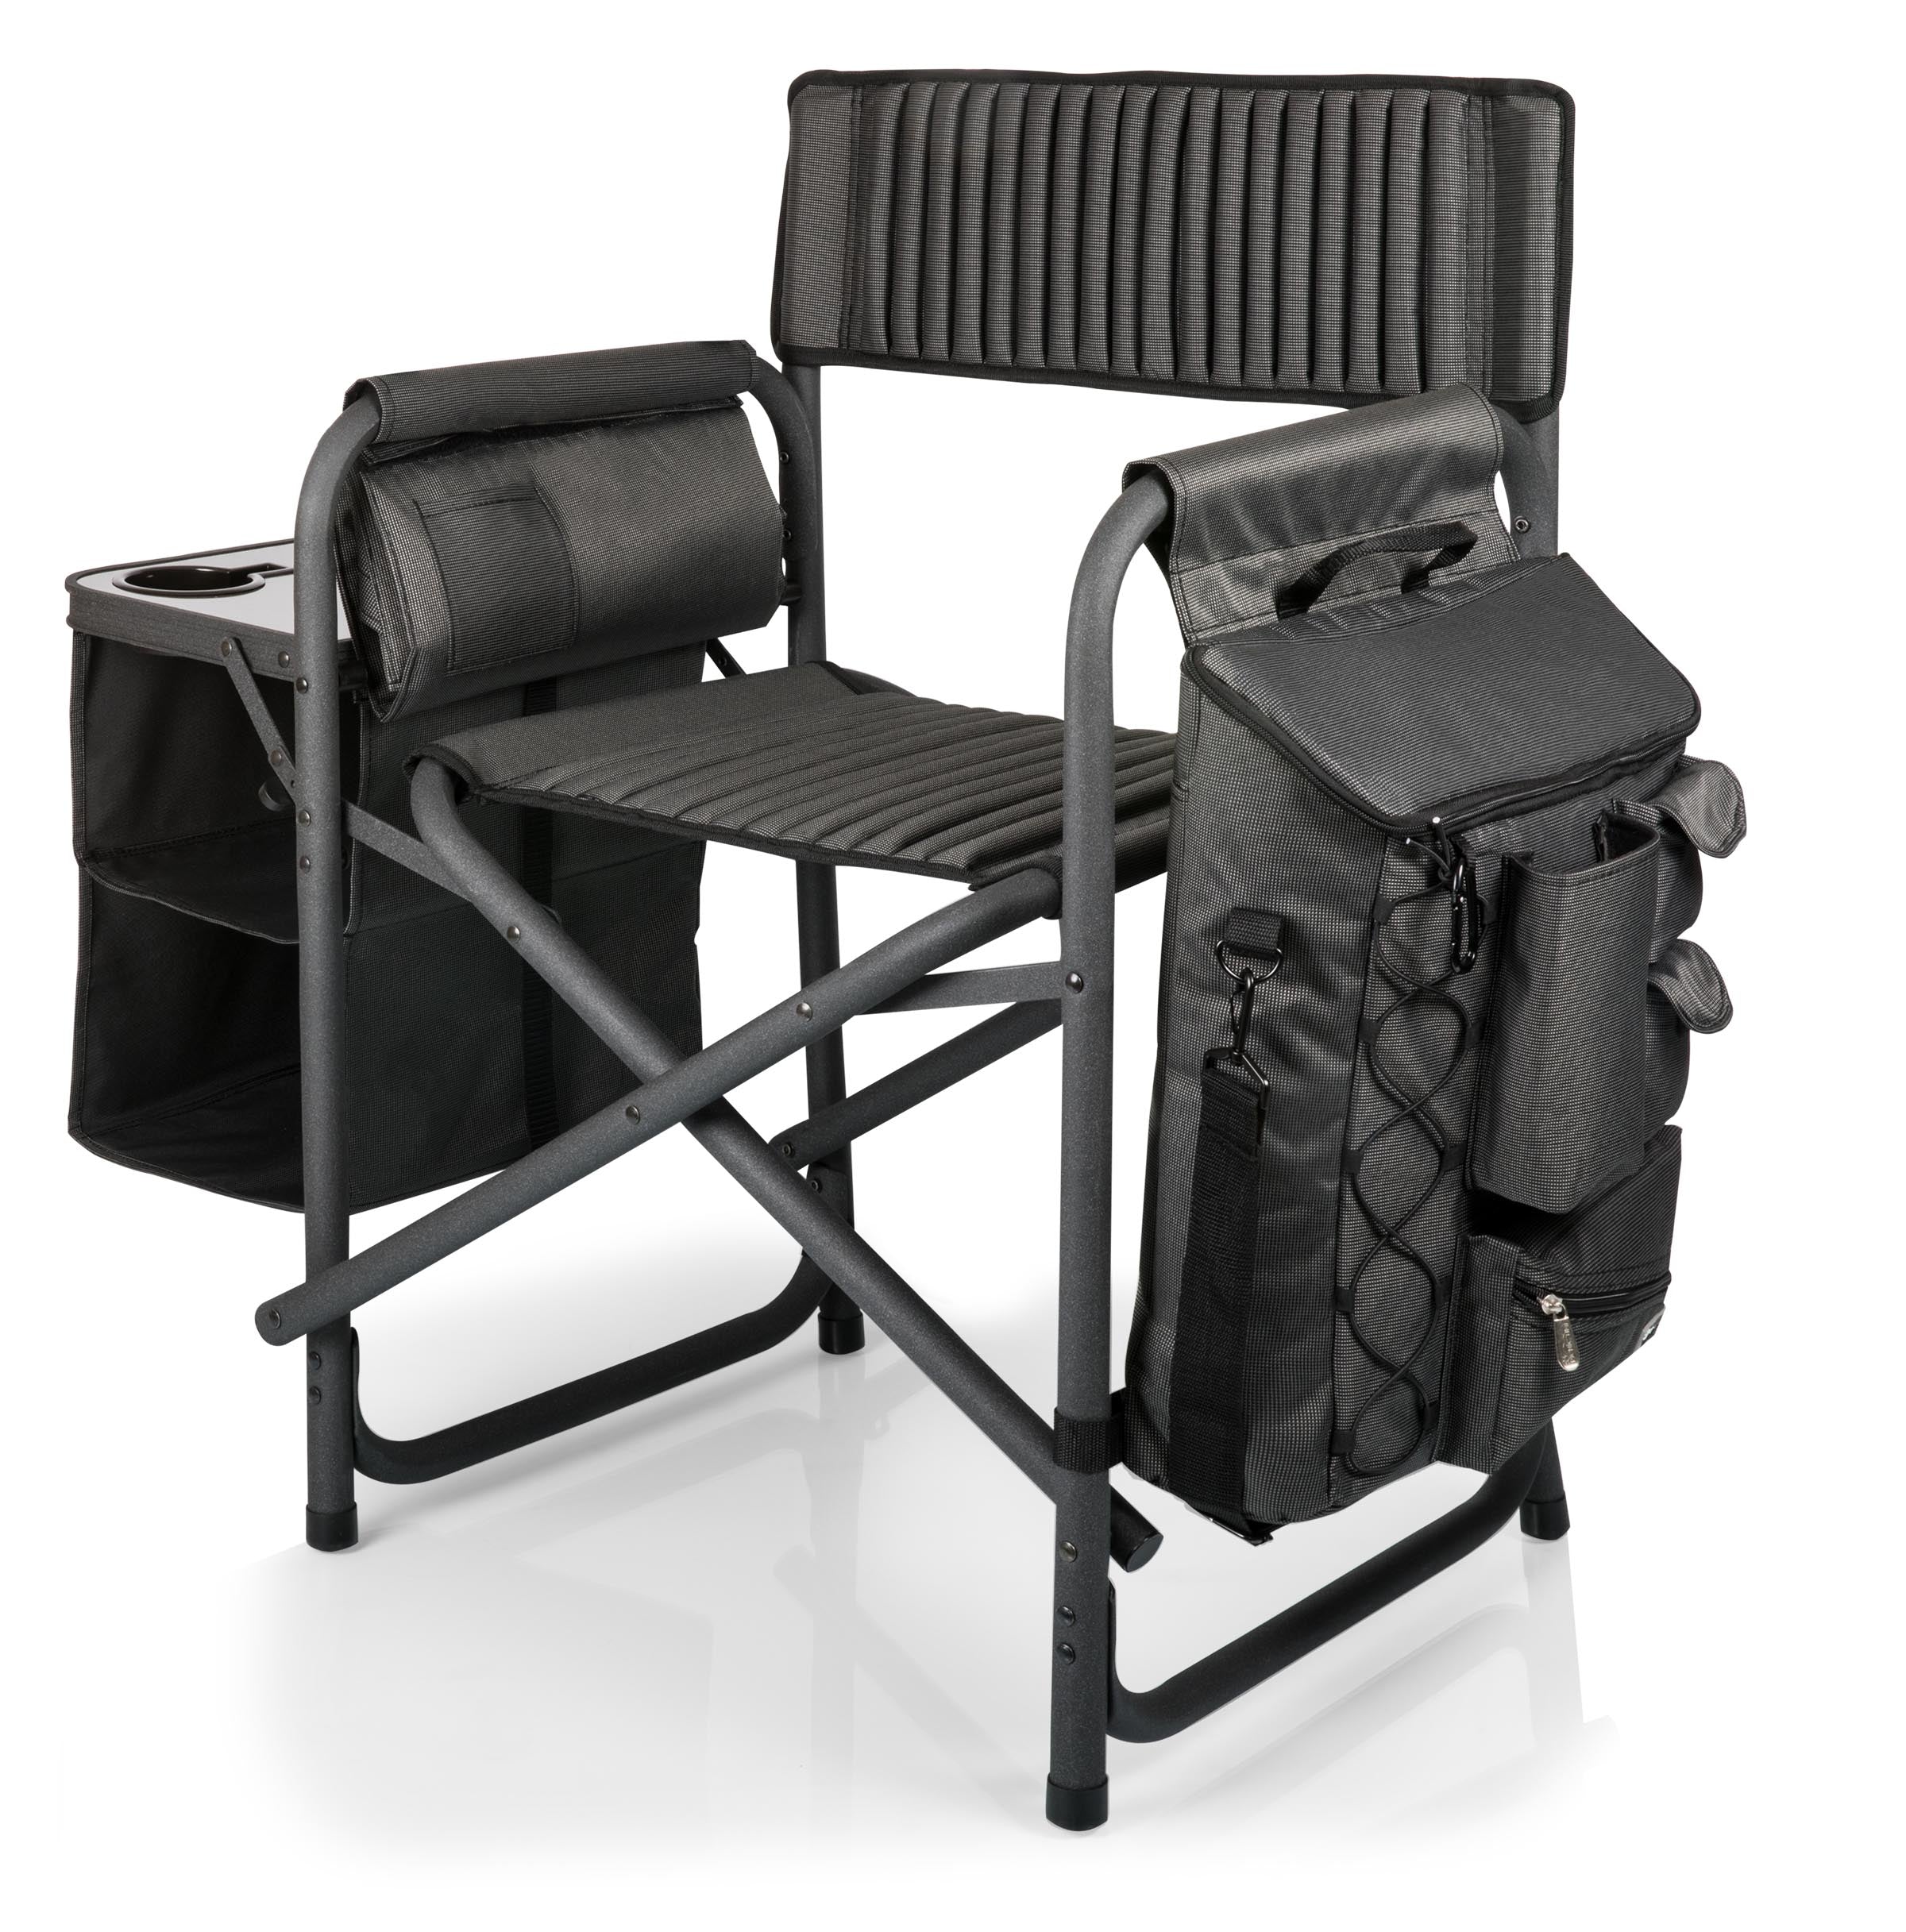 Florida State Seminoles - Fusion Camping Chair